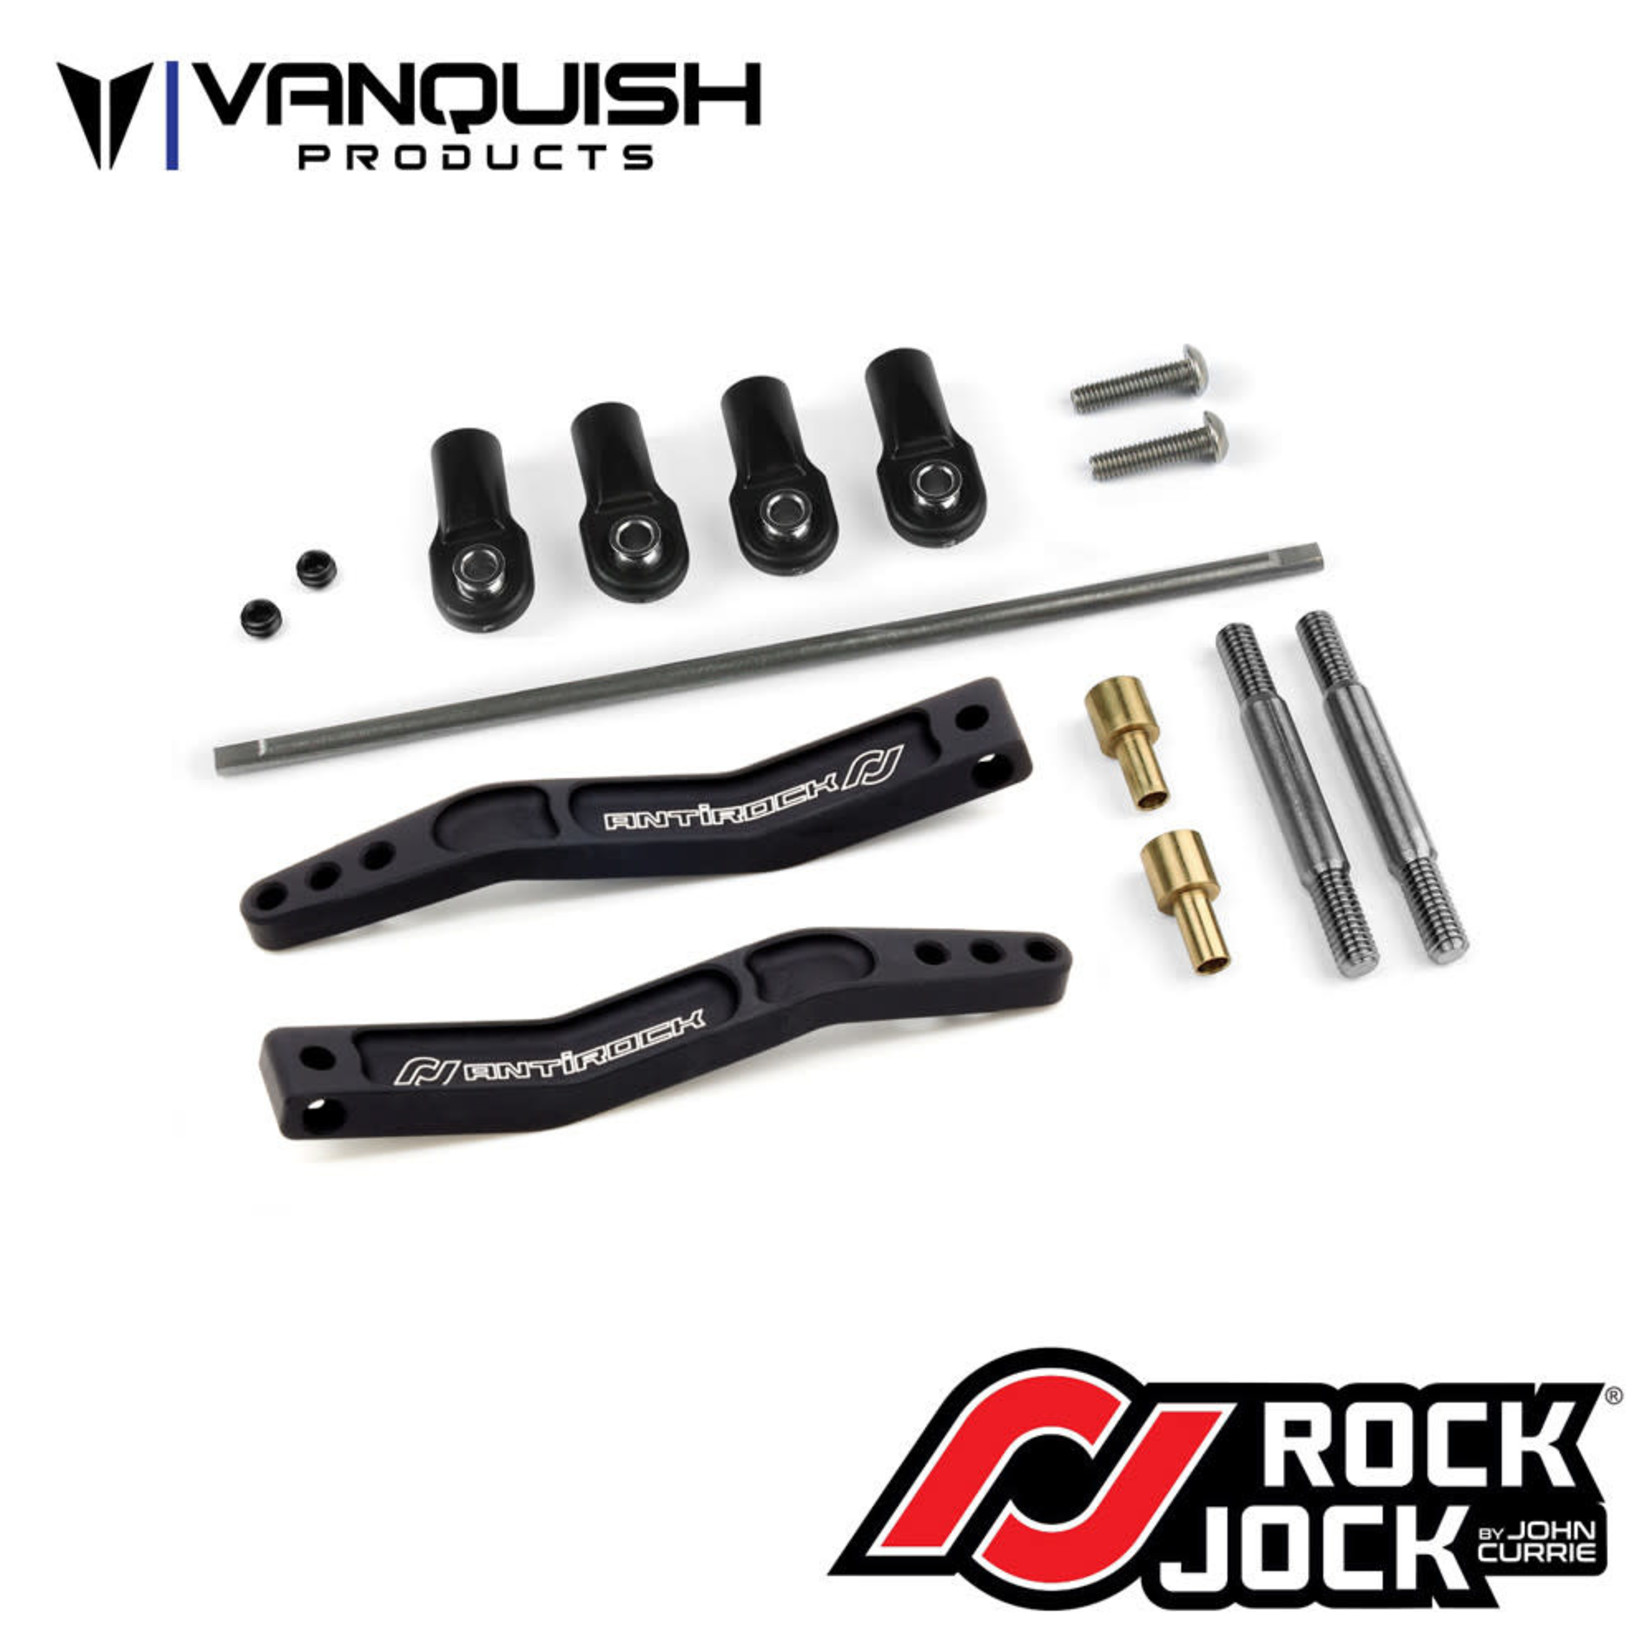 Vanquish Products Vanquish Products Rock Jock Antirock Yeti Sway Bar V3 (Black) #VPS08304